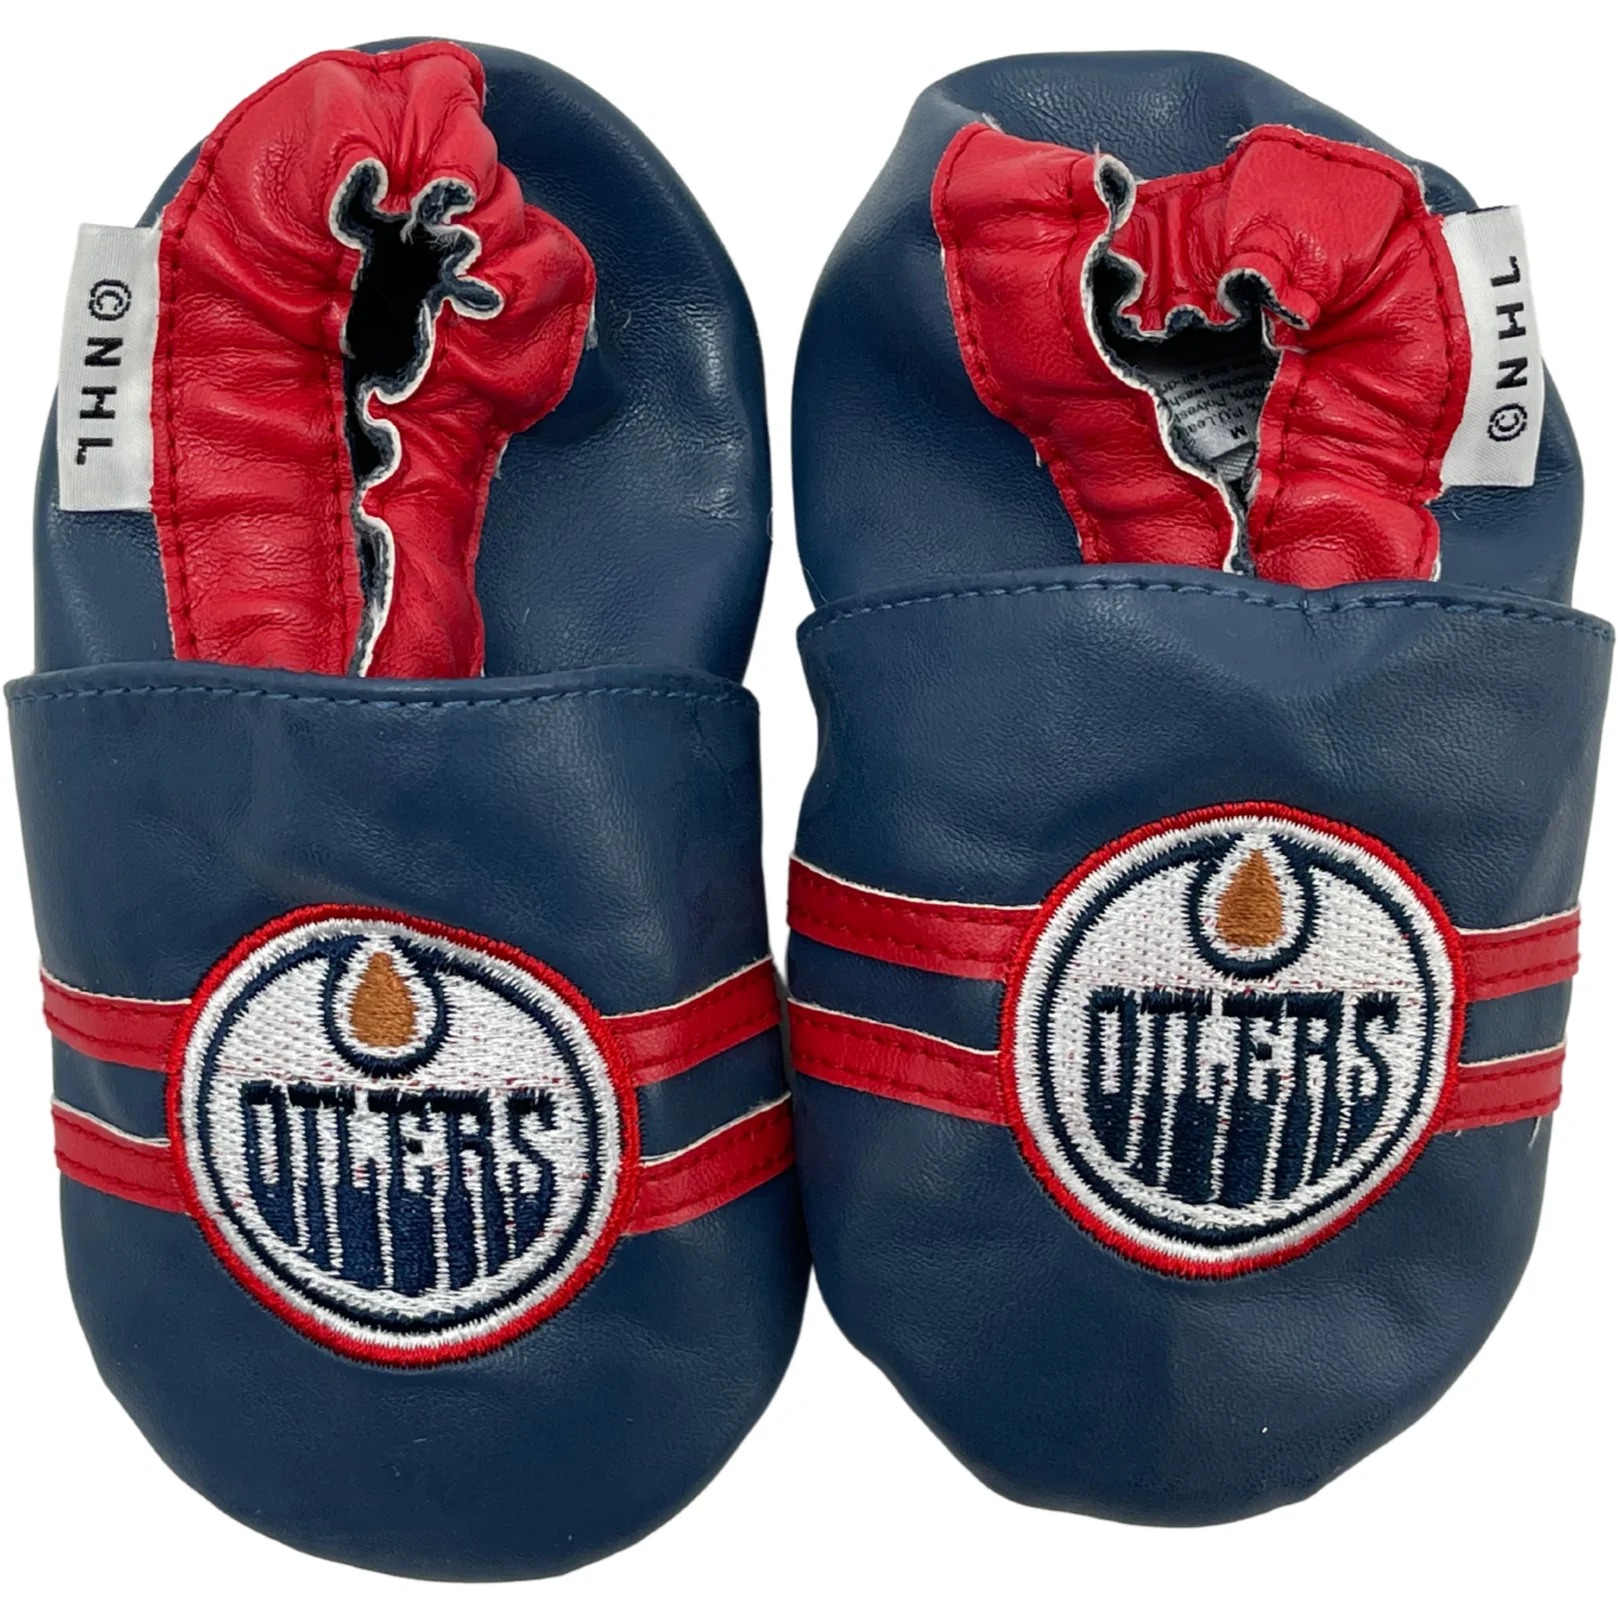 NHL Infant's Booties / Edmonton Oilers / Size 18-24 Months / Various Colours